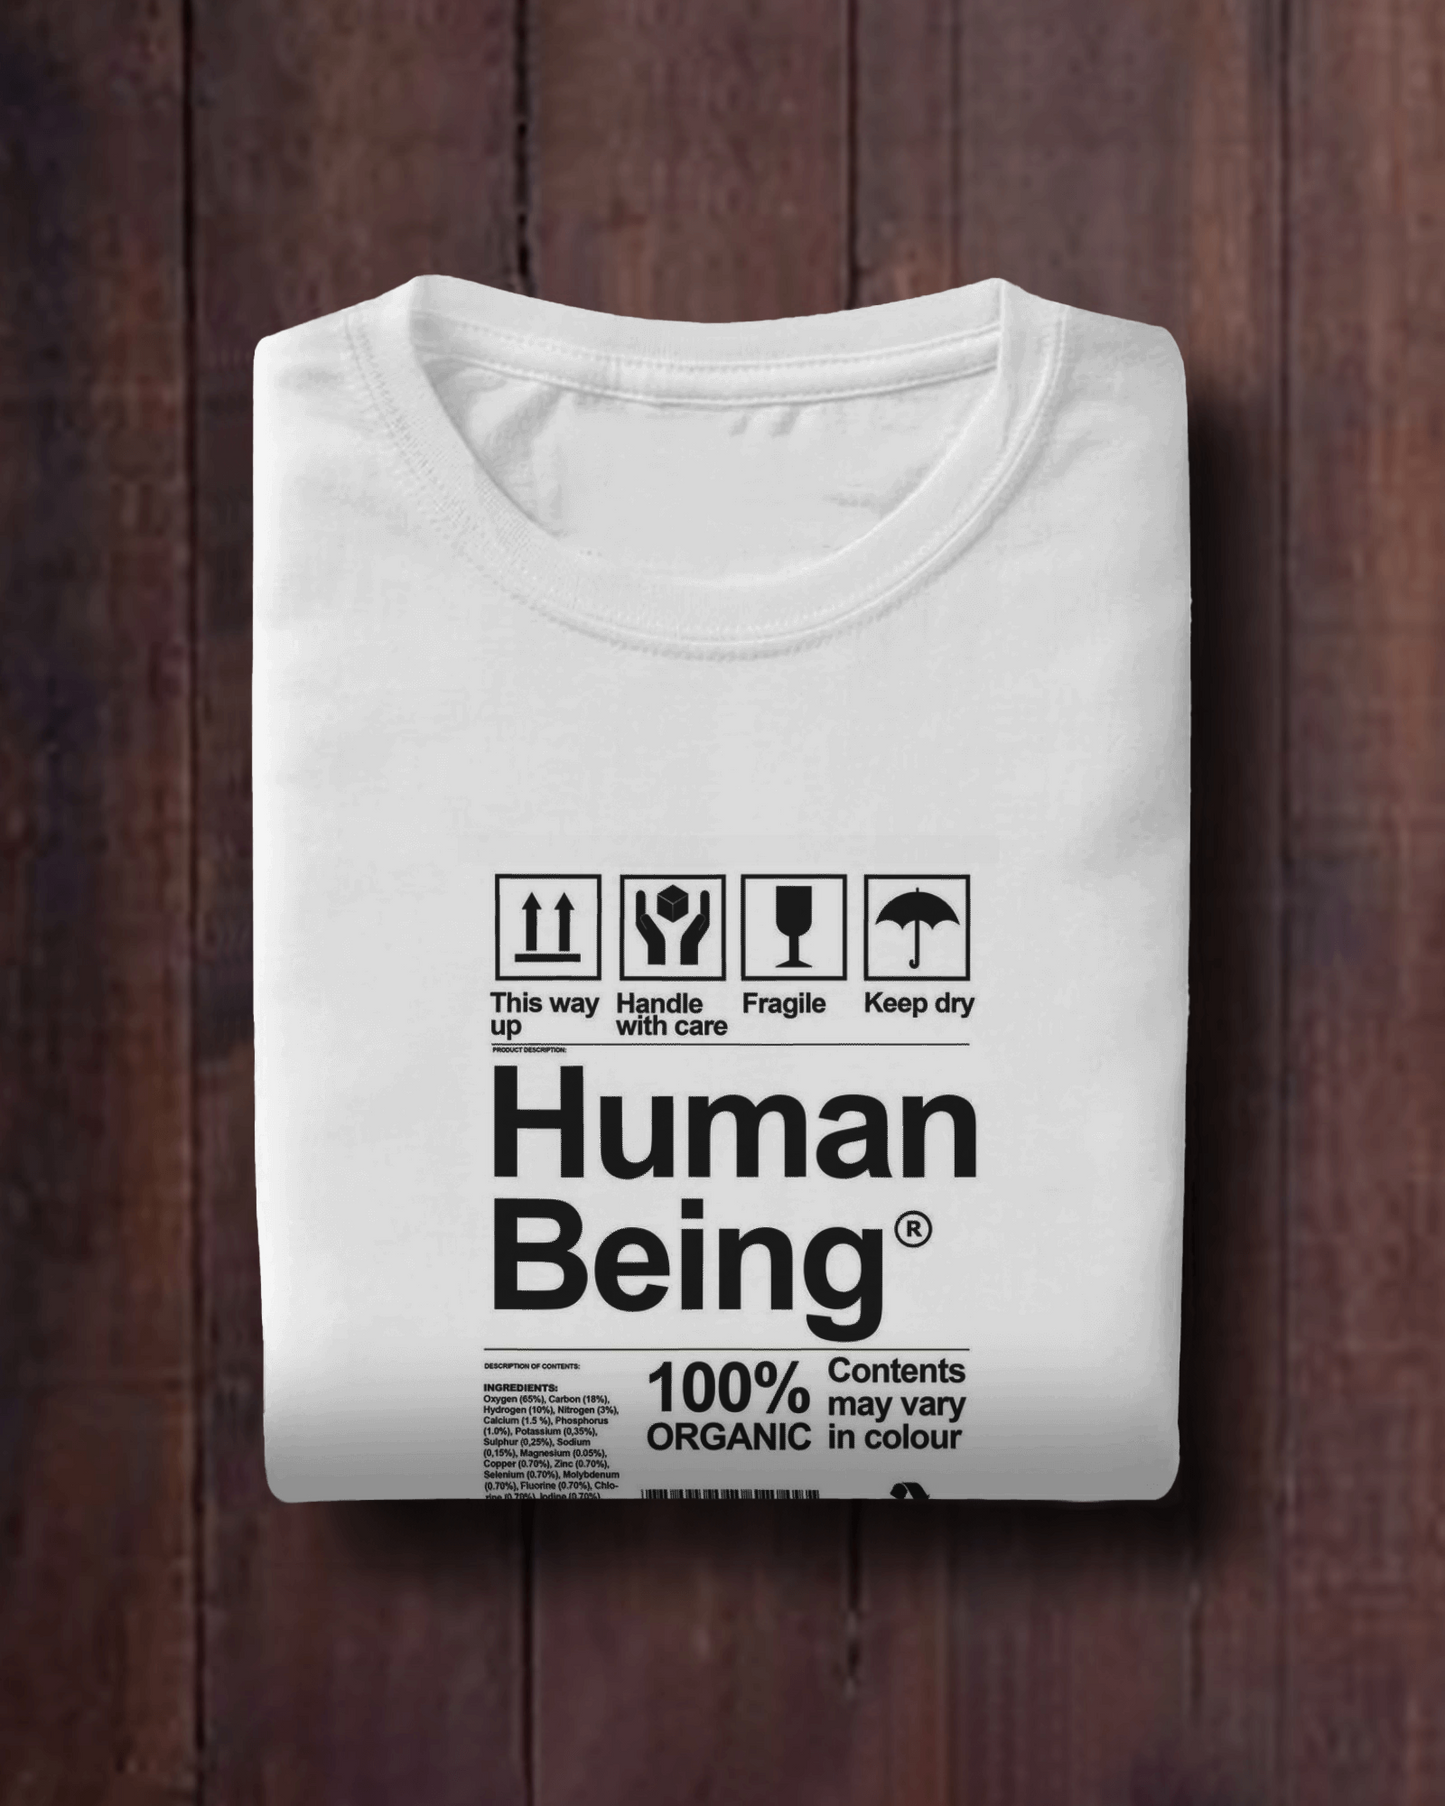 Tričko s krátkým rukávem Human Being